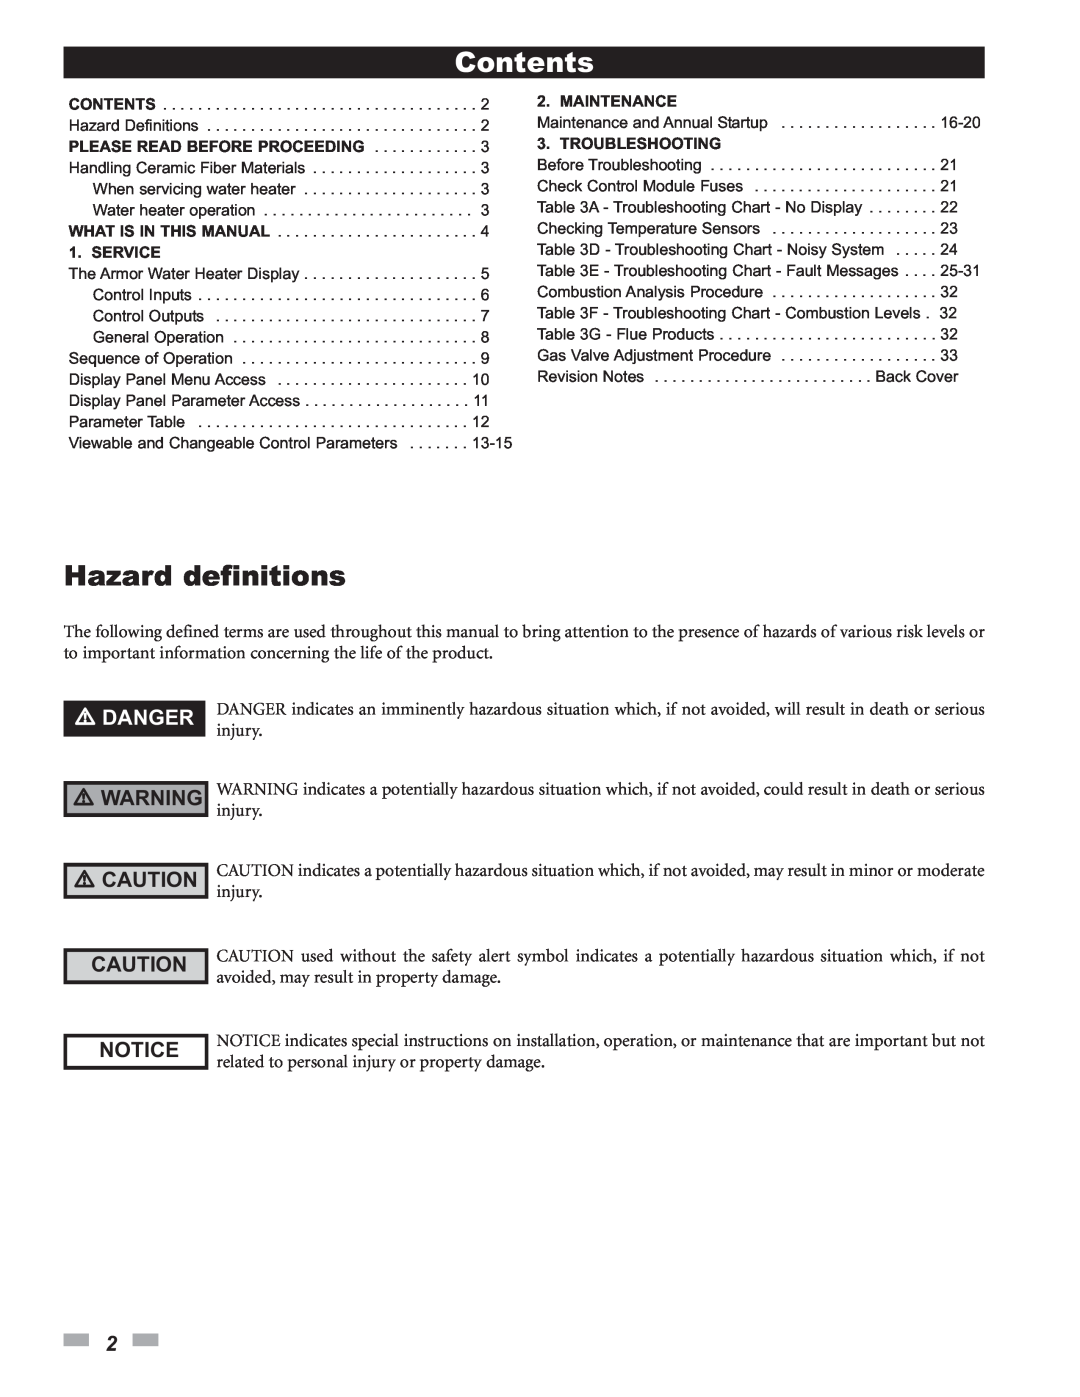 Lochinvar 150 - 500 service manual Hazard definitions, Danger, Contents 